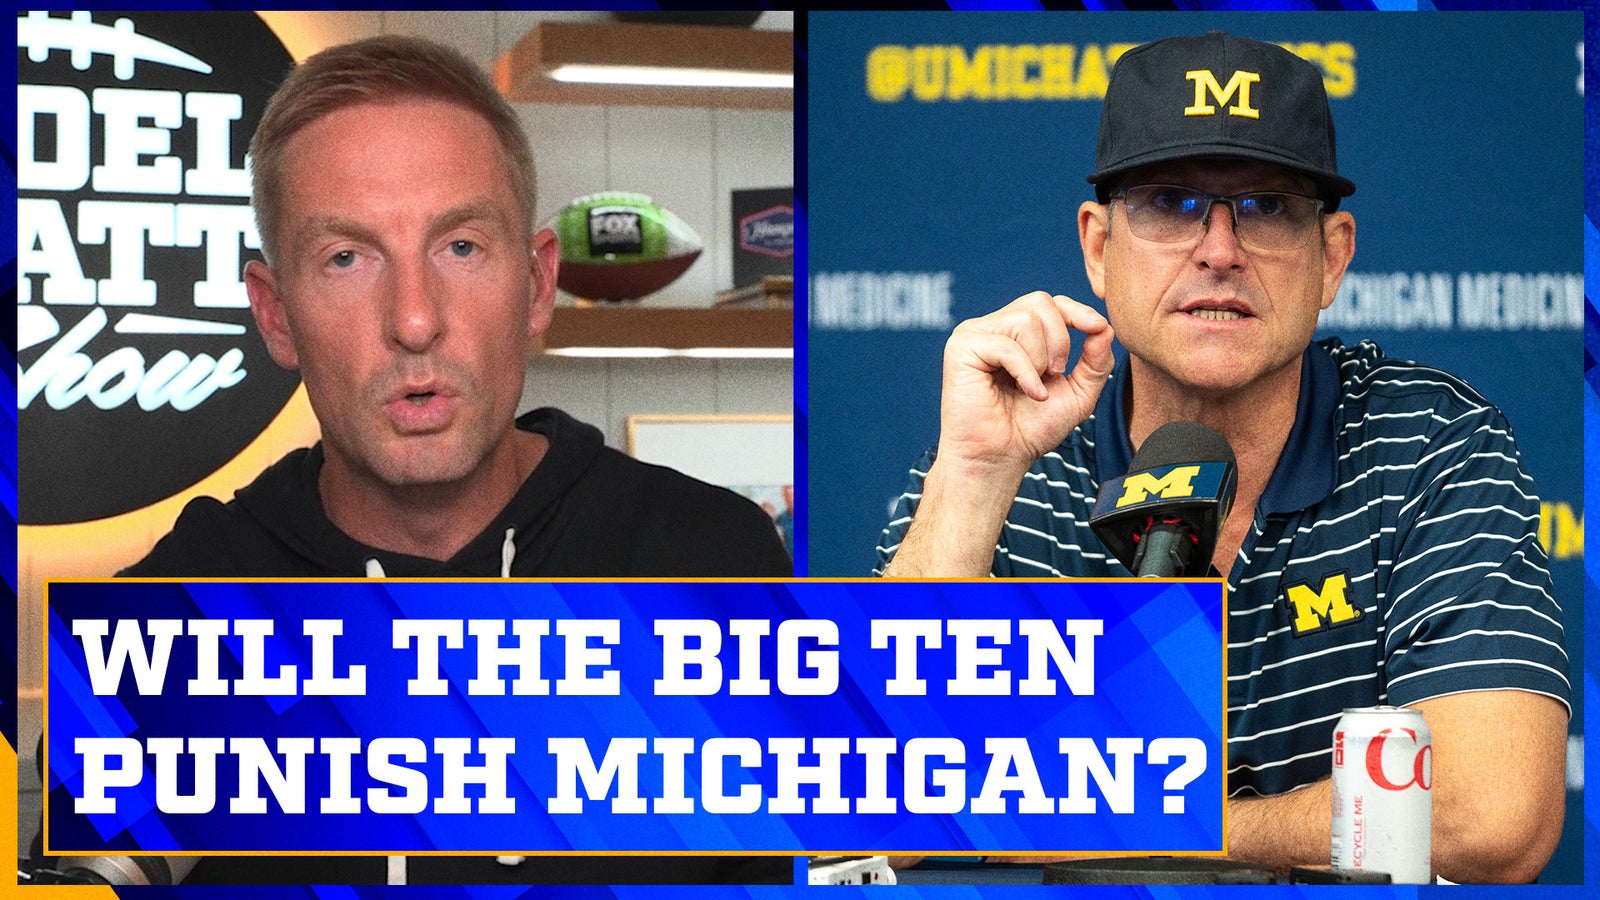 Will Big Ten punish Michigan before investigation is complete?